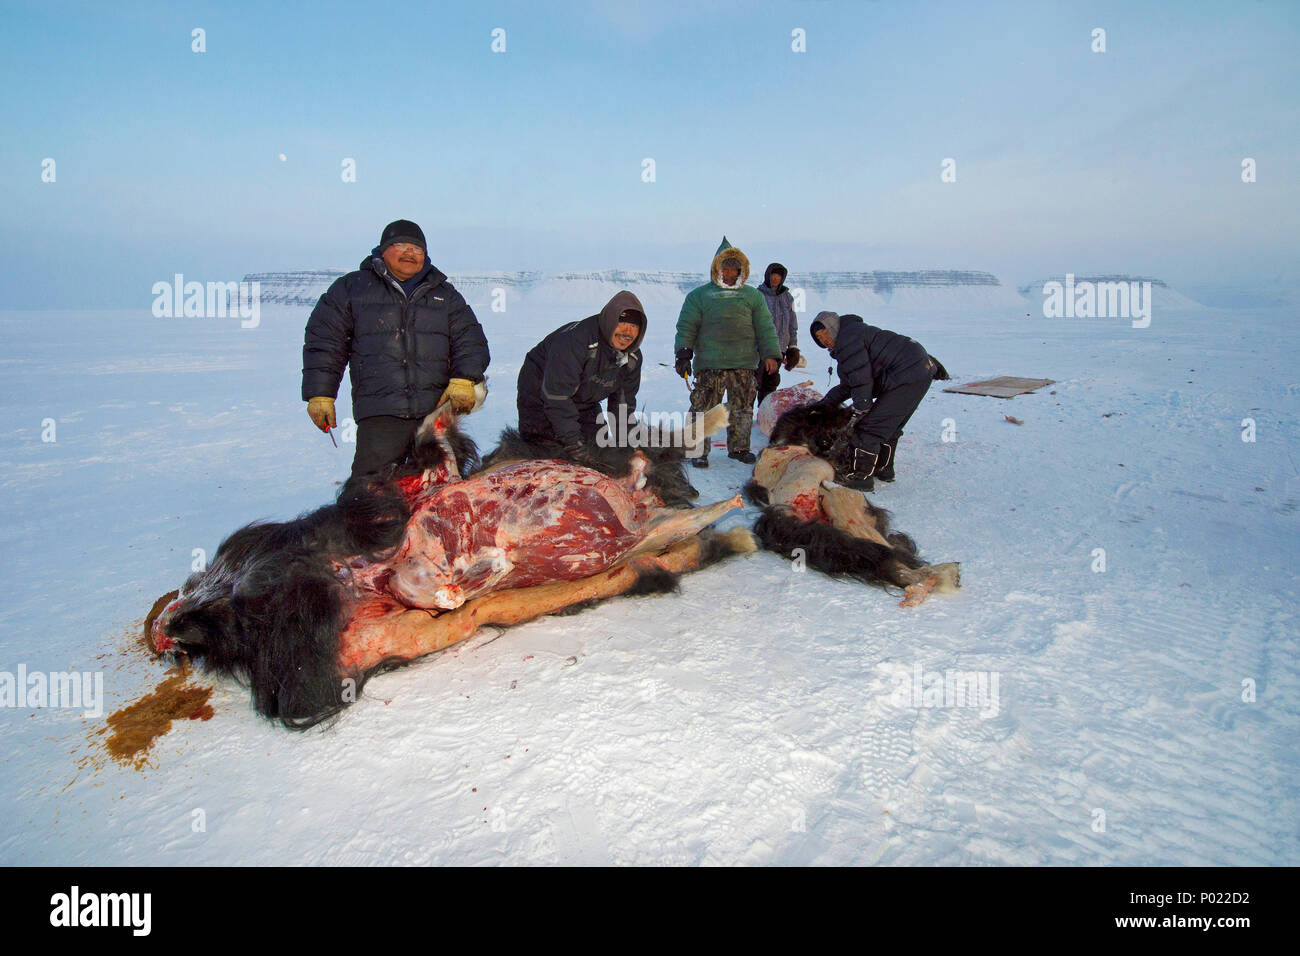 Huntsman skinning shot Muskox (Ovibus moschatus), Nunavut teritorry, Canada Stock Photo